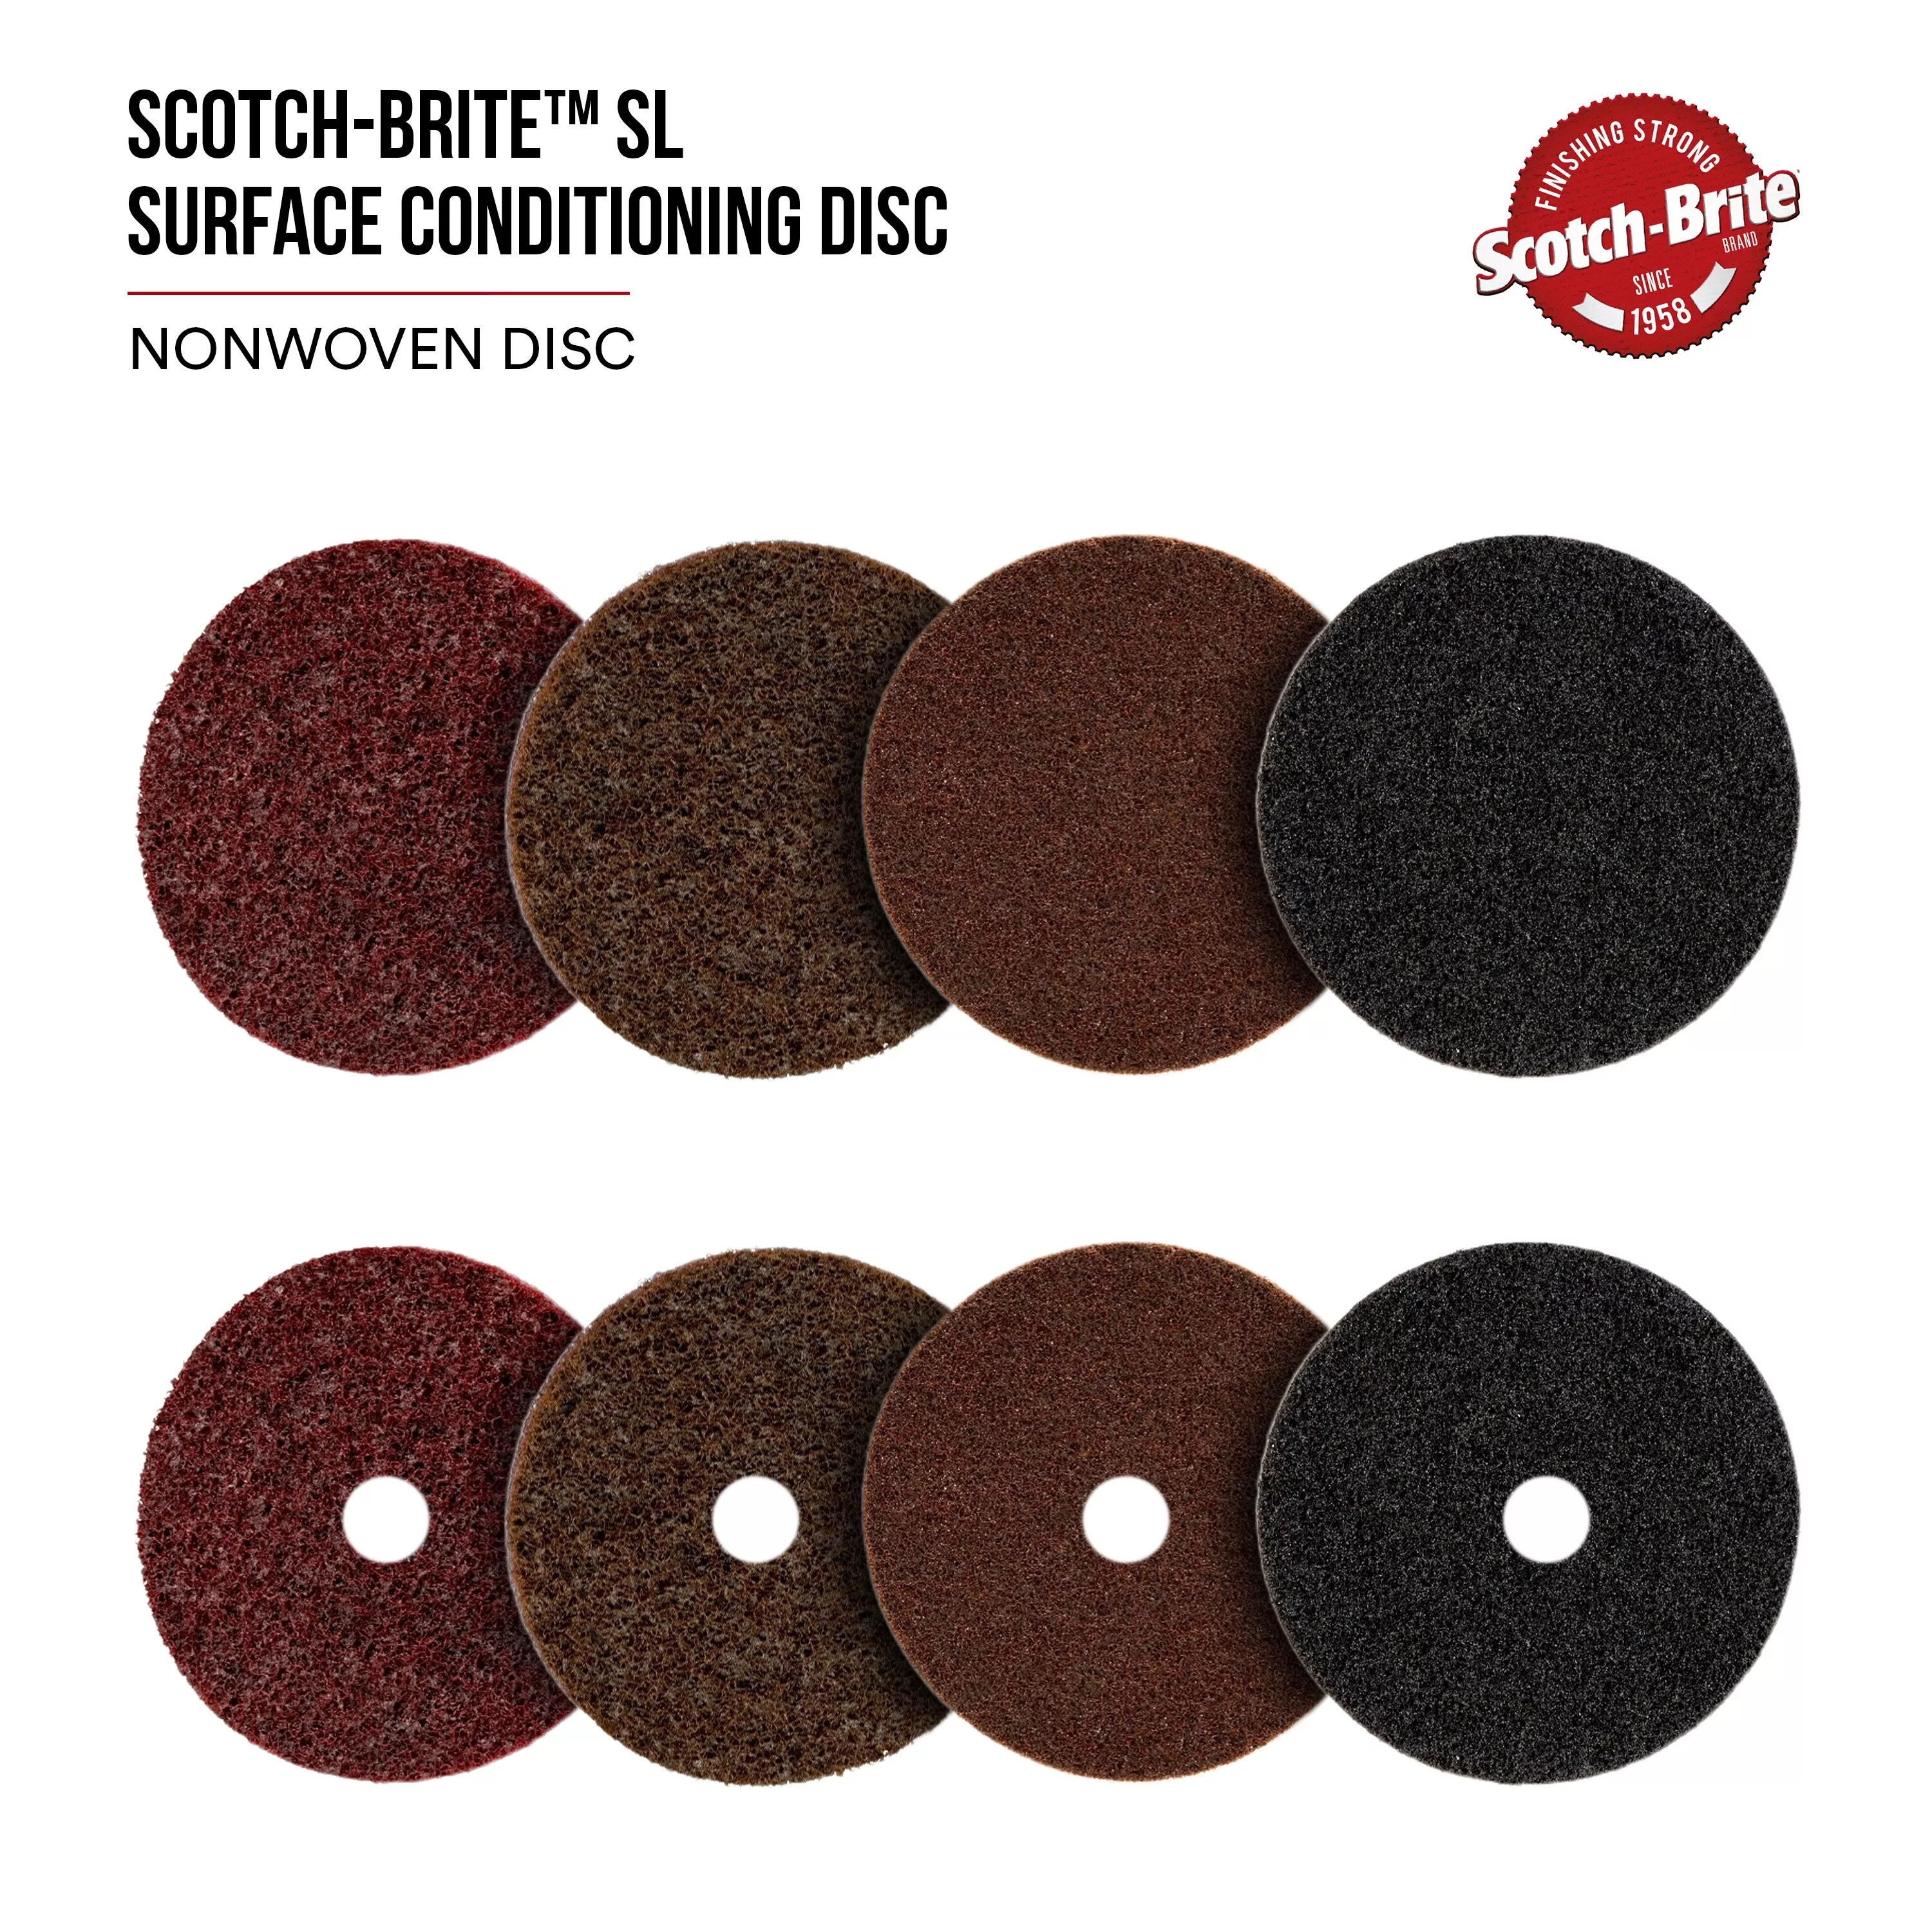 SKU 7100054118 | Scotch-Brite™ SL Surface Conditioning Disc